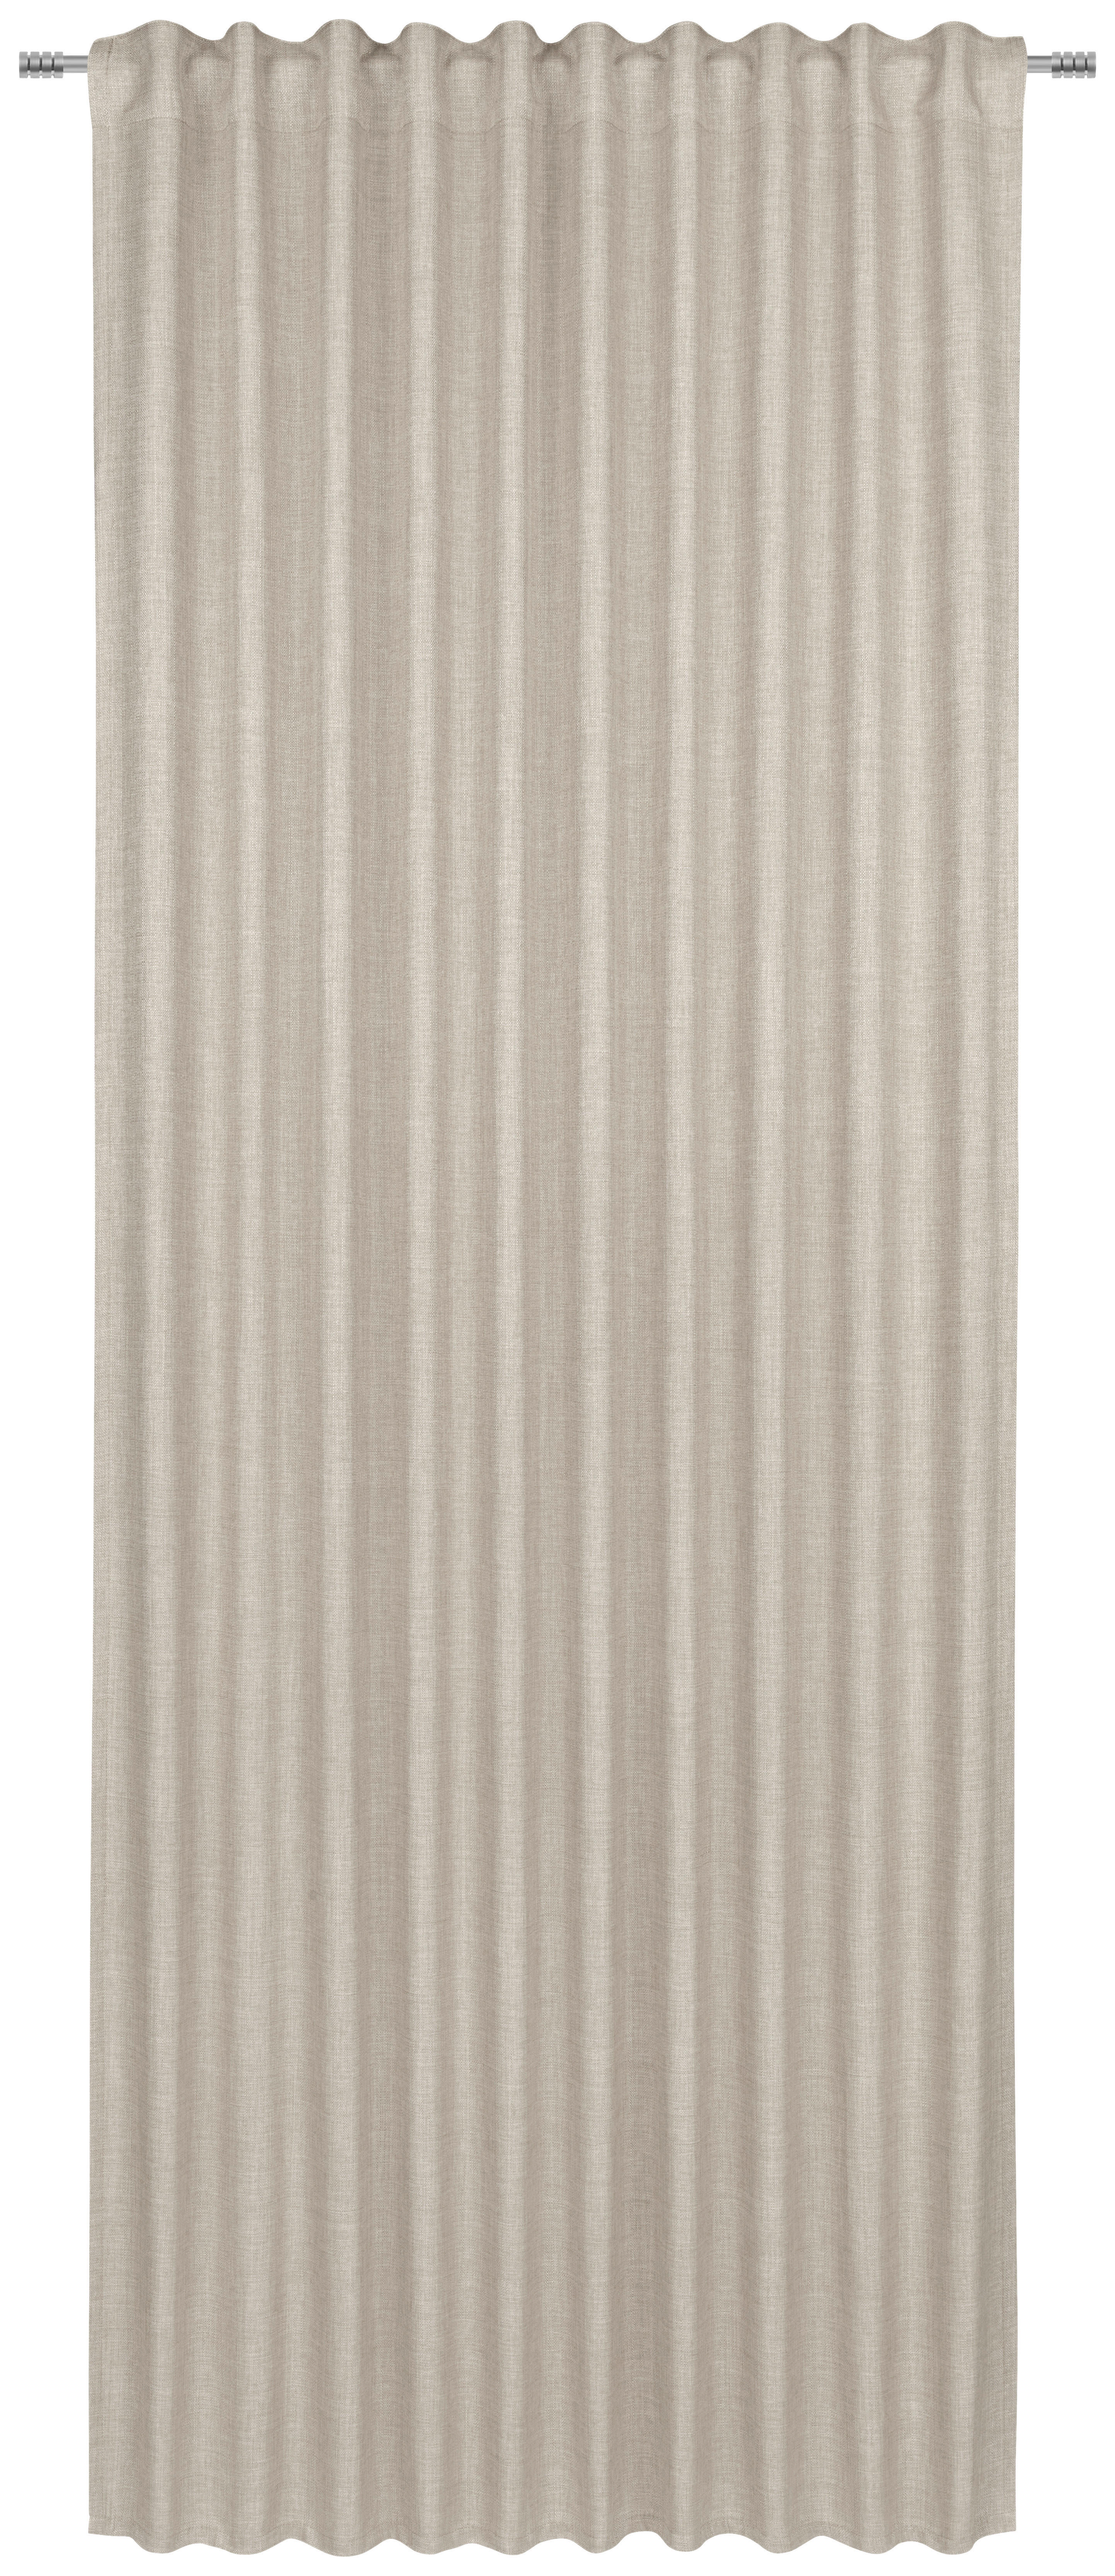 FERTIGVORHANG blickdicht 140/245 cm   - Beige, Basics, Textil (140/245cm) - Boxxx